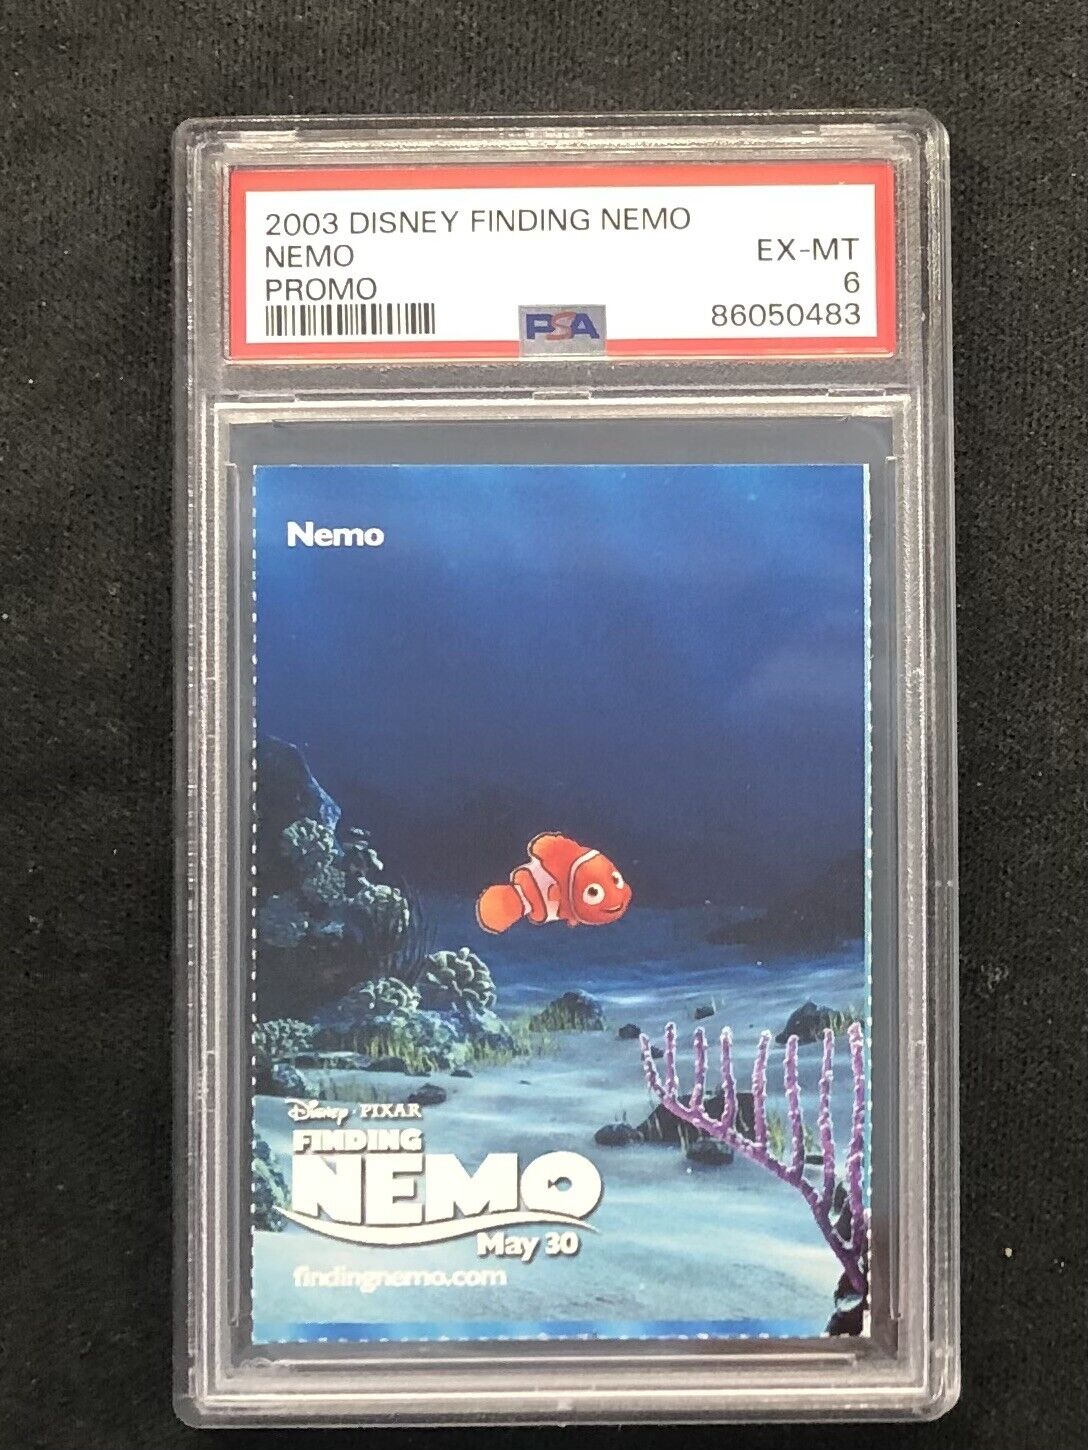 PSA 6 NEMO 2003 Disney Finding Nemo Promo Card SECOND HIGHEST EVER GRADED